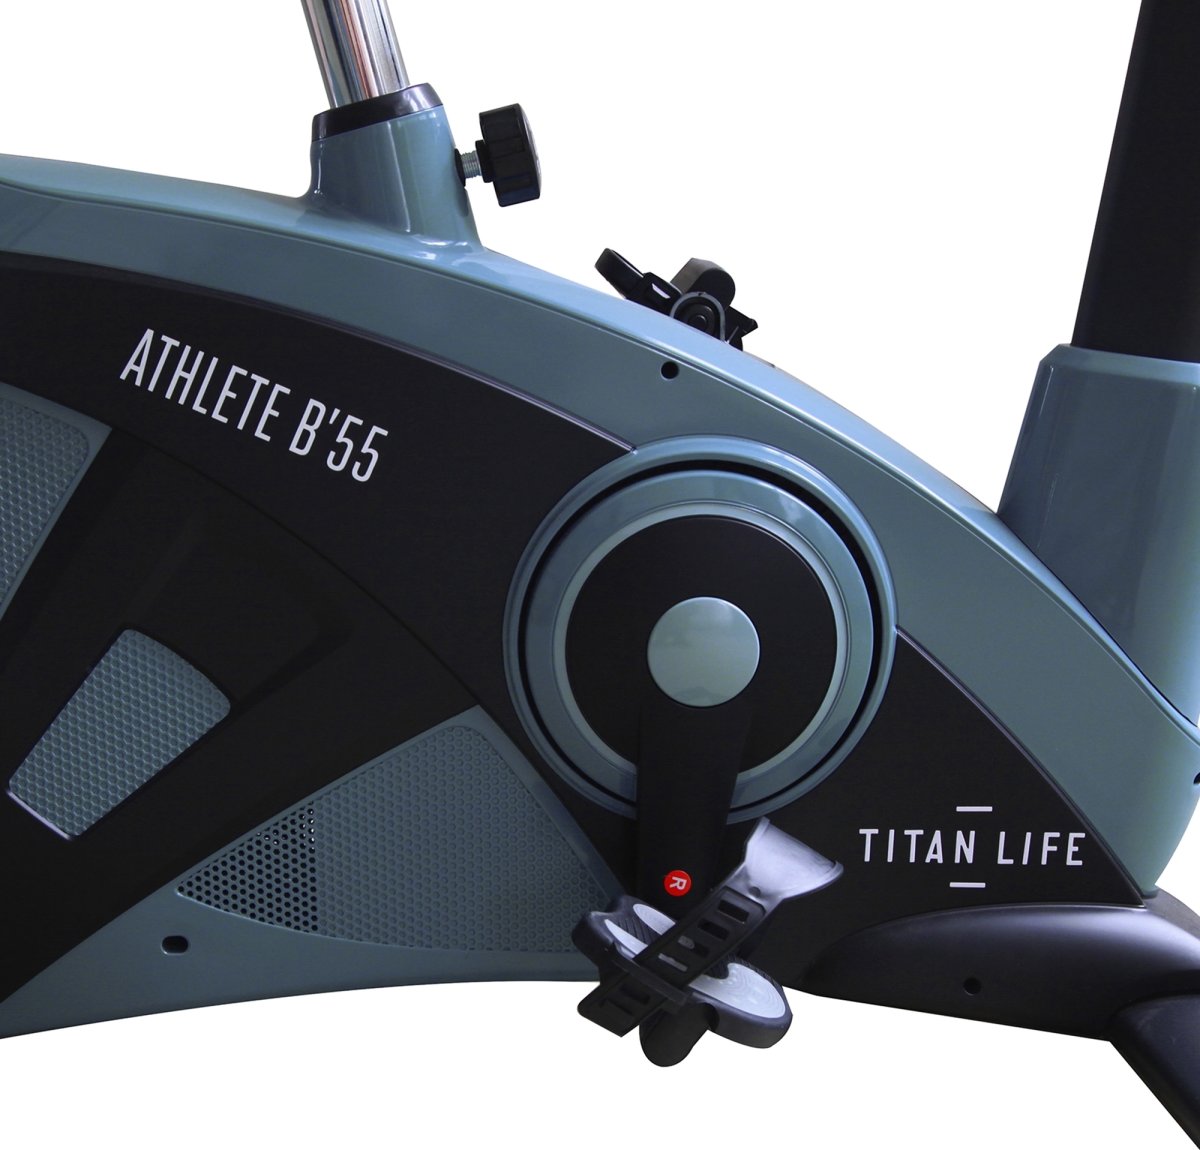 Titan Life athlete B55 Motionscykel